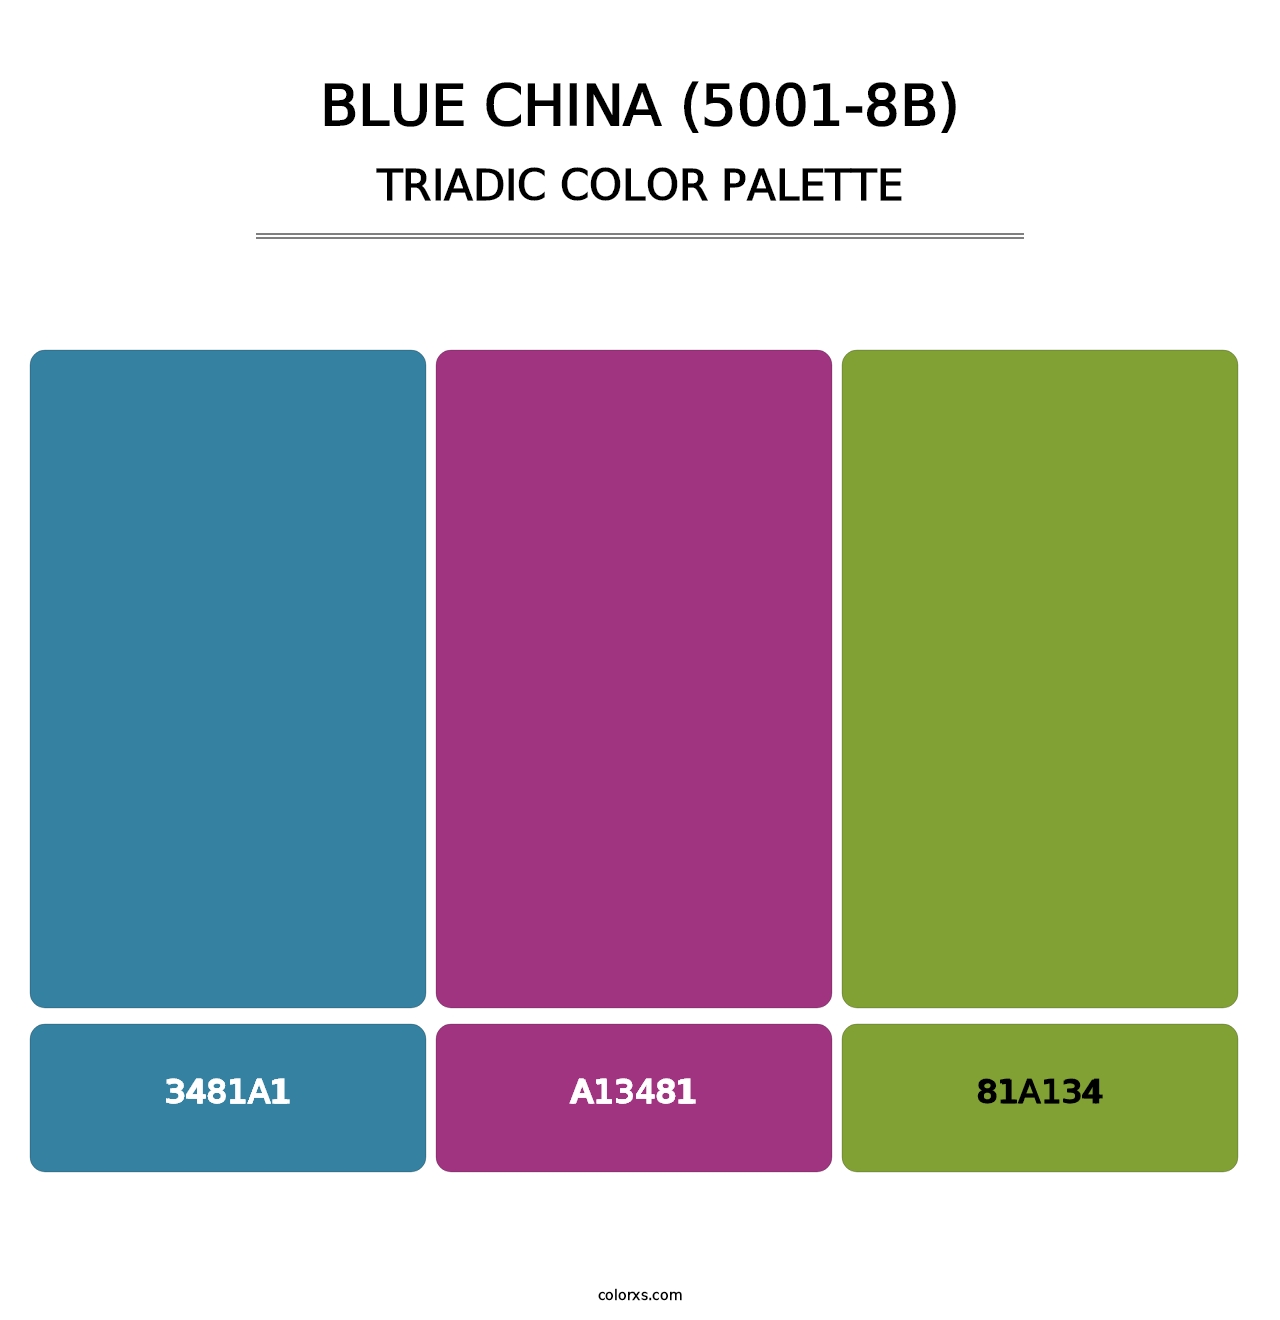 Blue China (5001-8B) - Triadic Color Palette